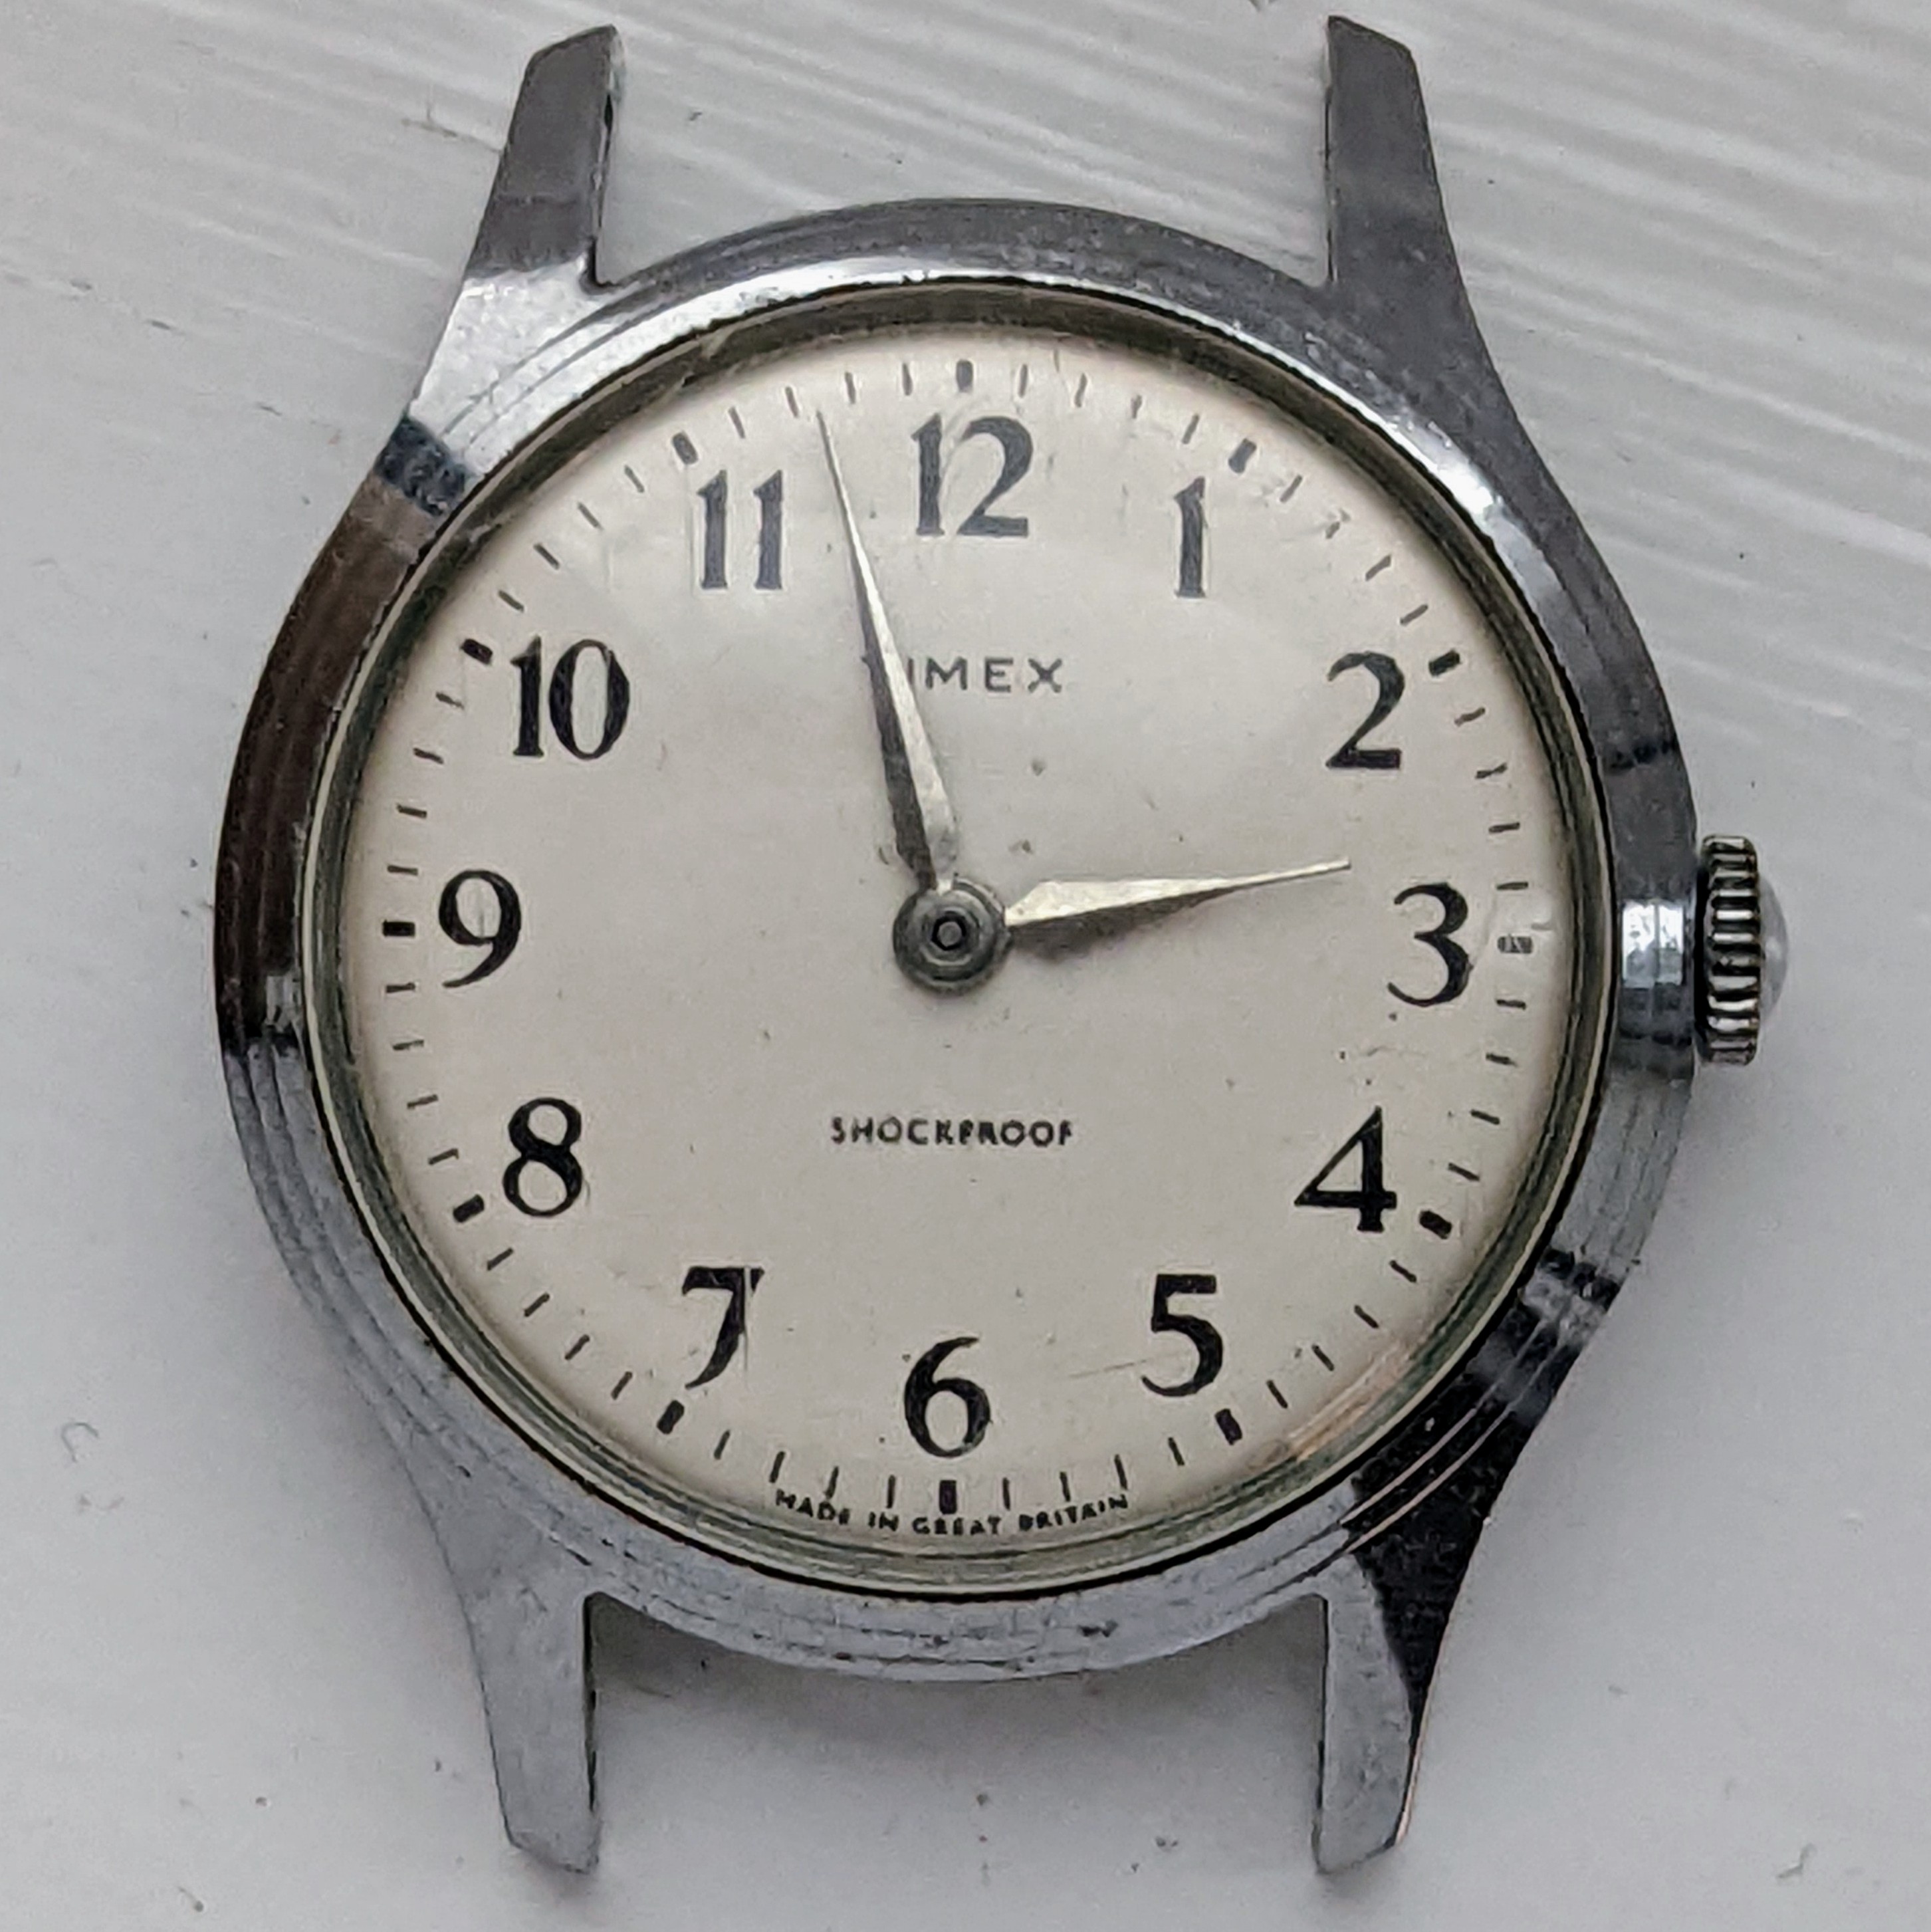 Timex Continental 1045 2260 [1960]